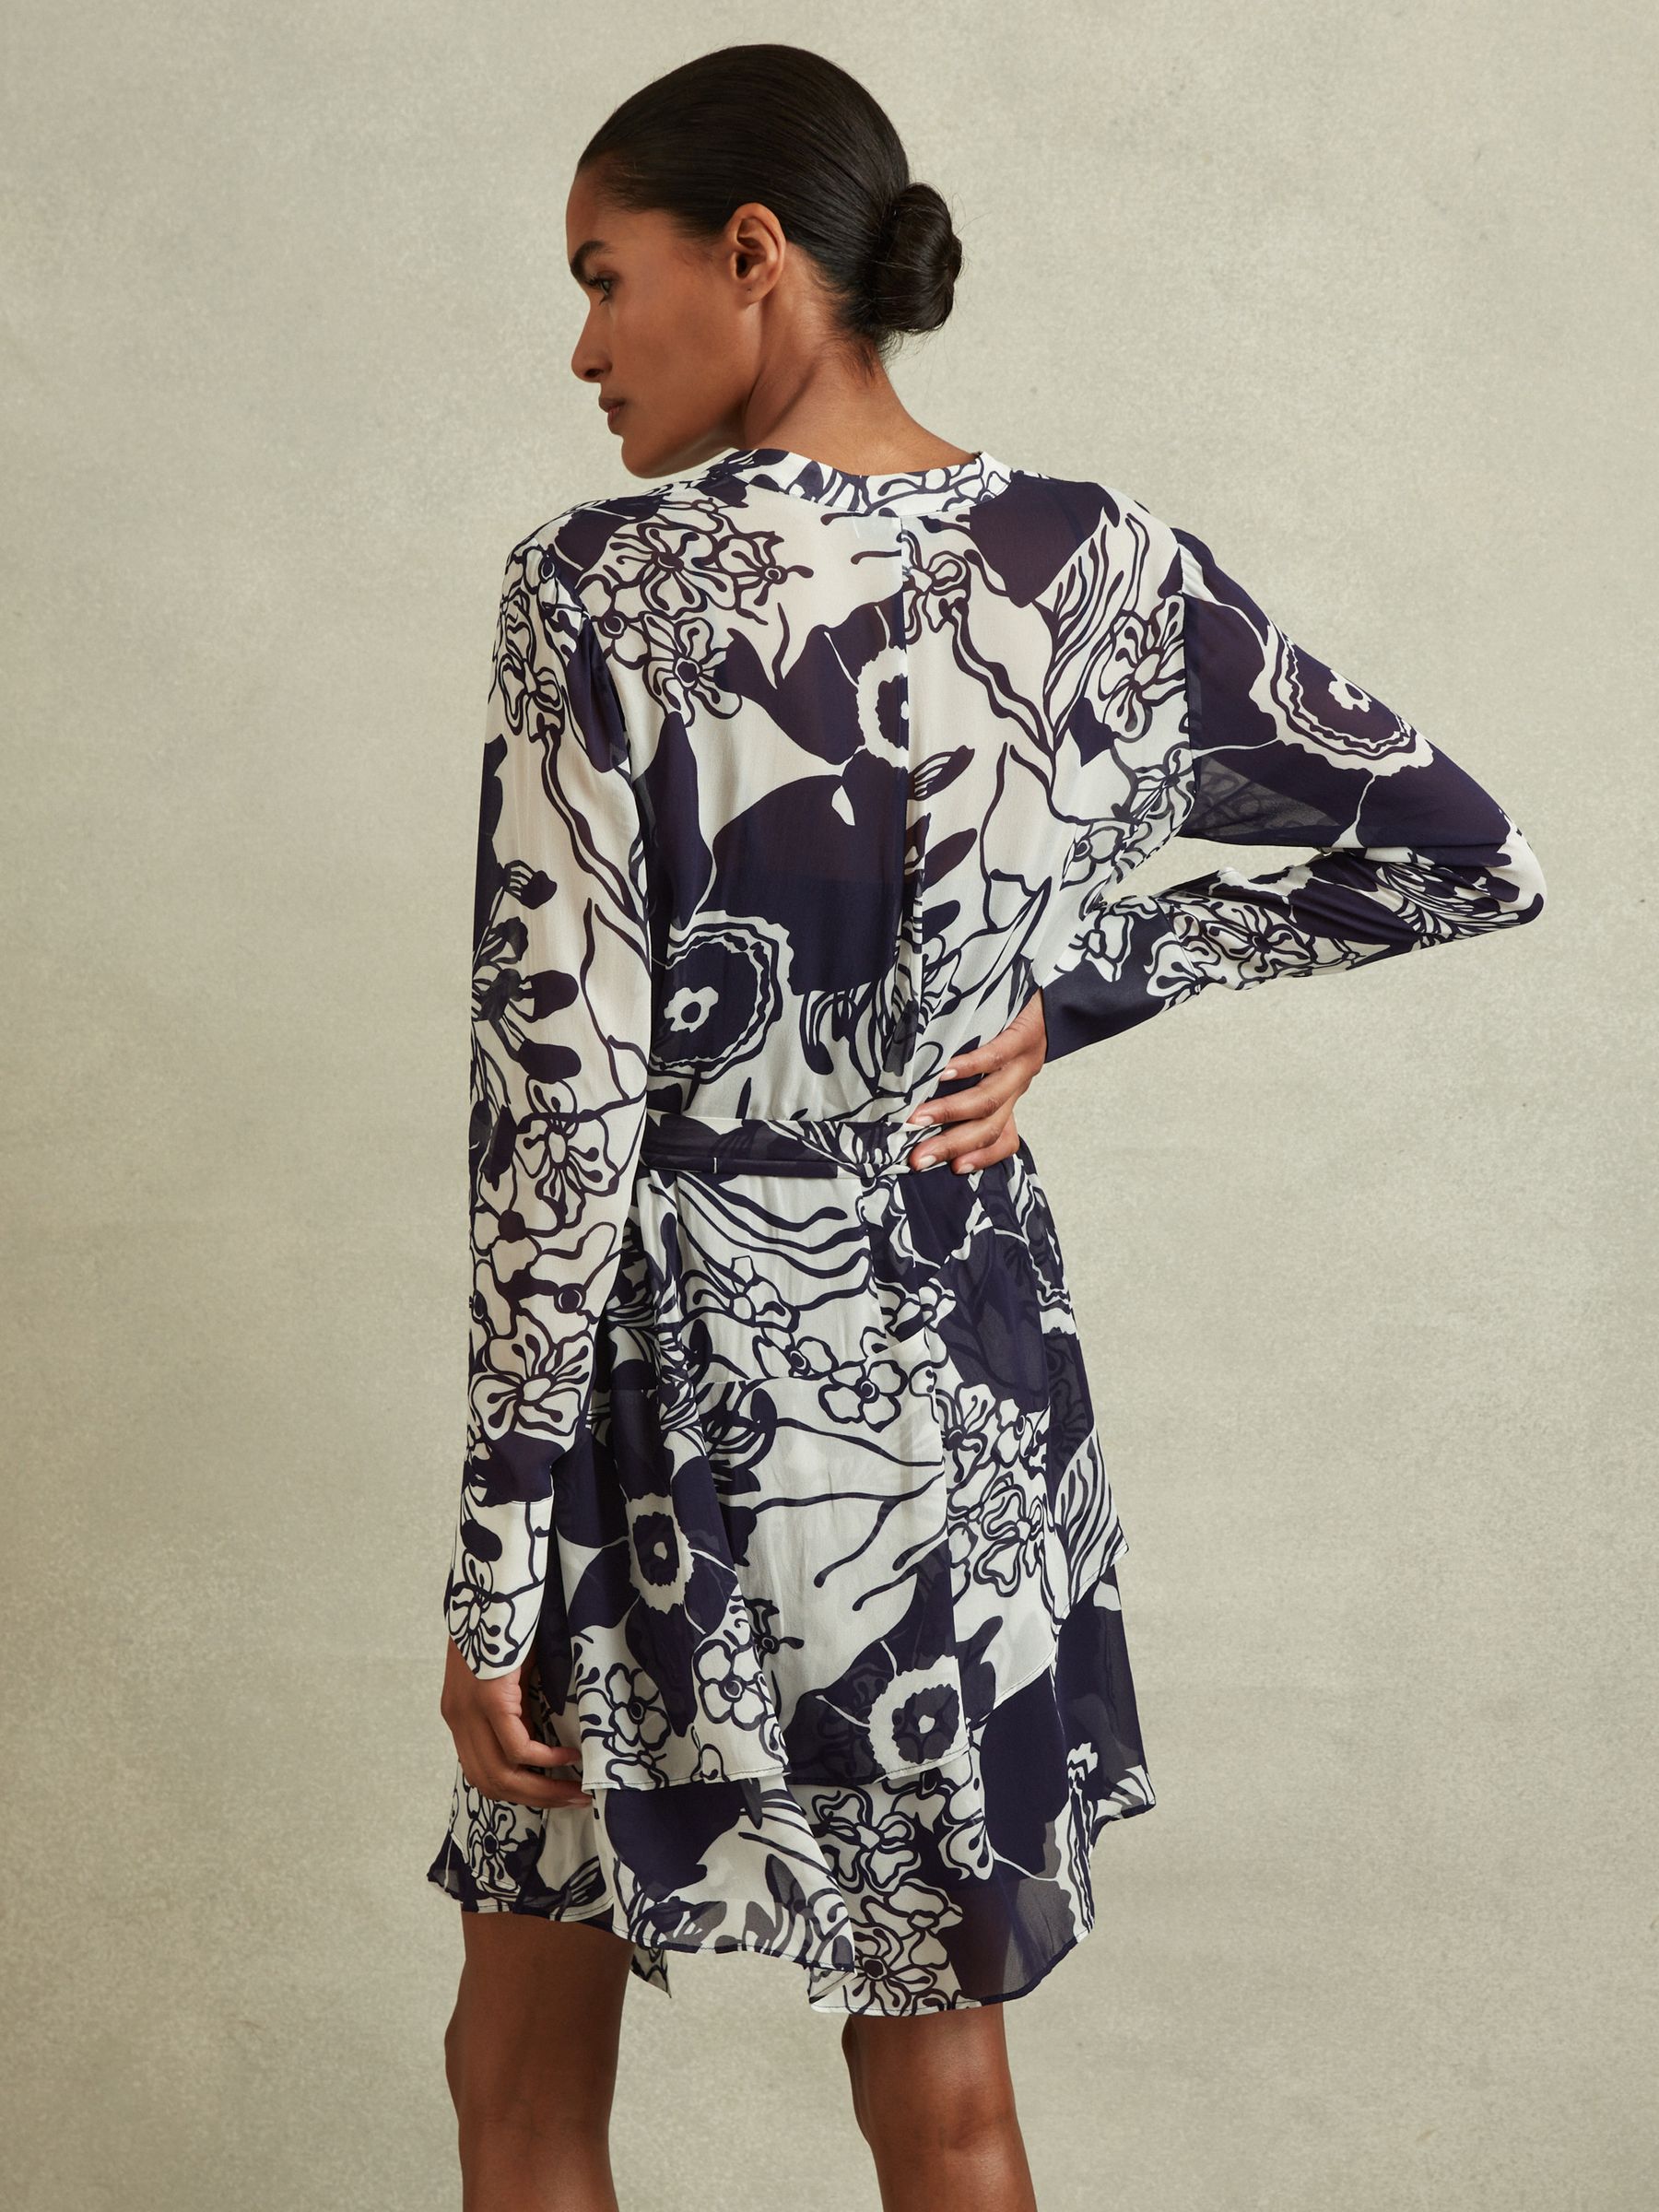 Reiss Sienna Printed Belted Mini Dress | REISS USA